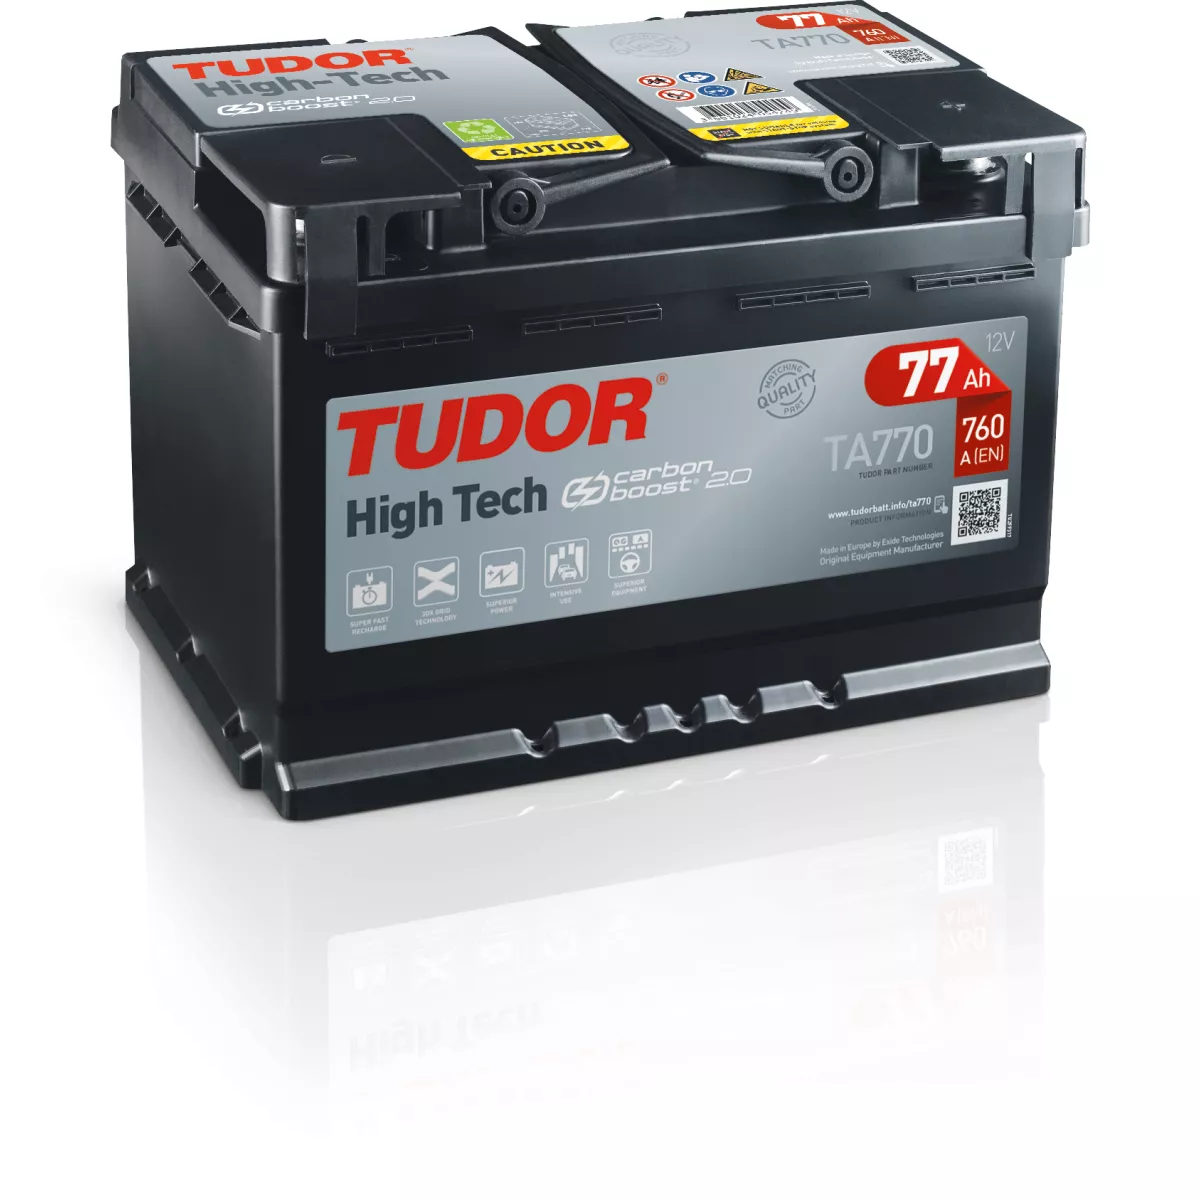 Batterie HIGH TECH TUDOR TA770 12V 77Ah 760A - Batteries Auto